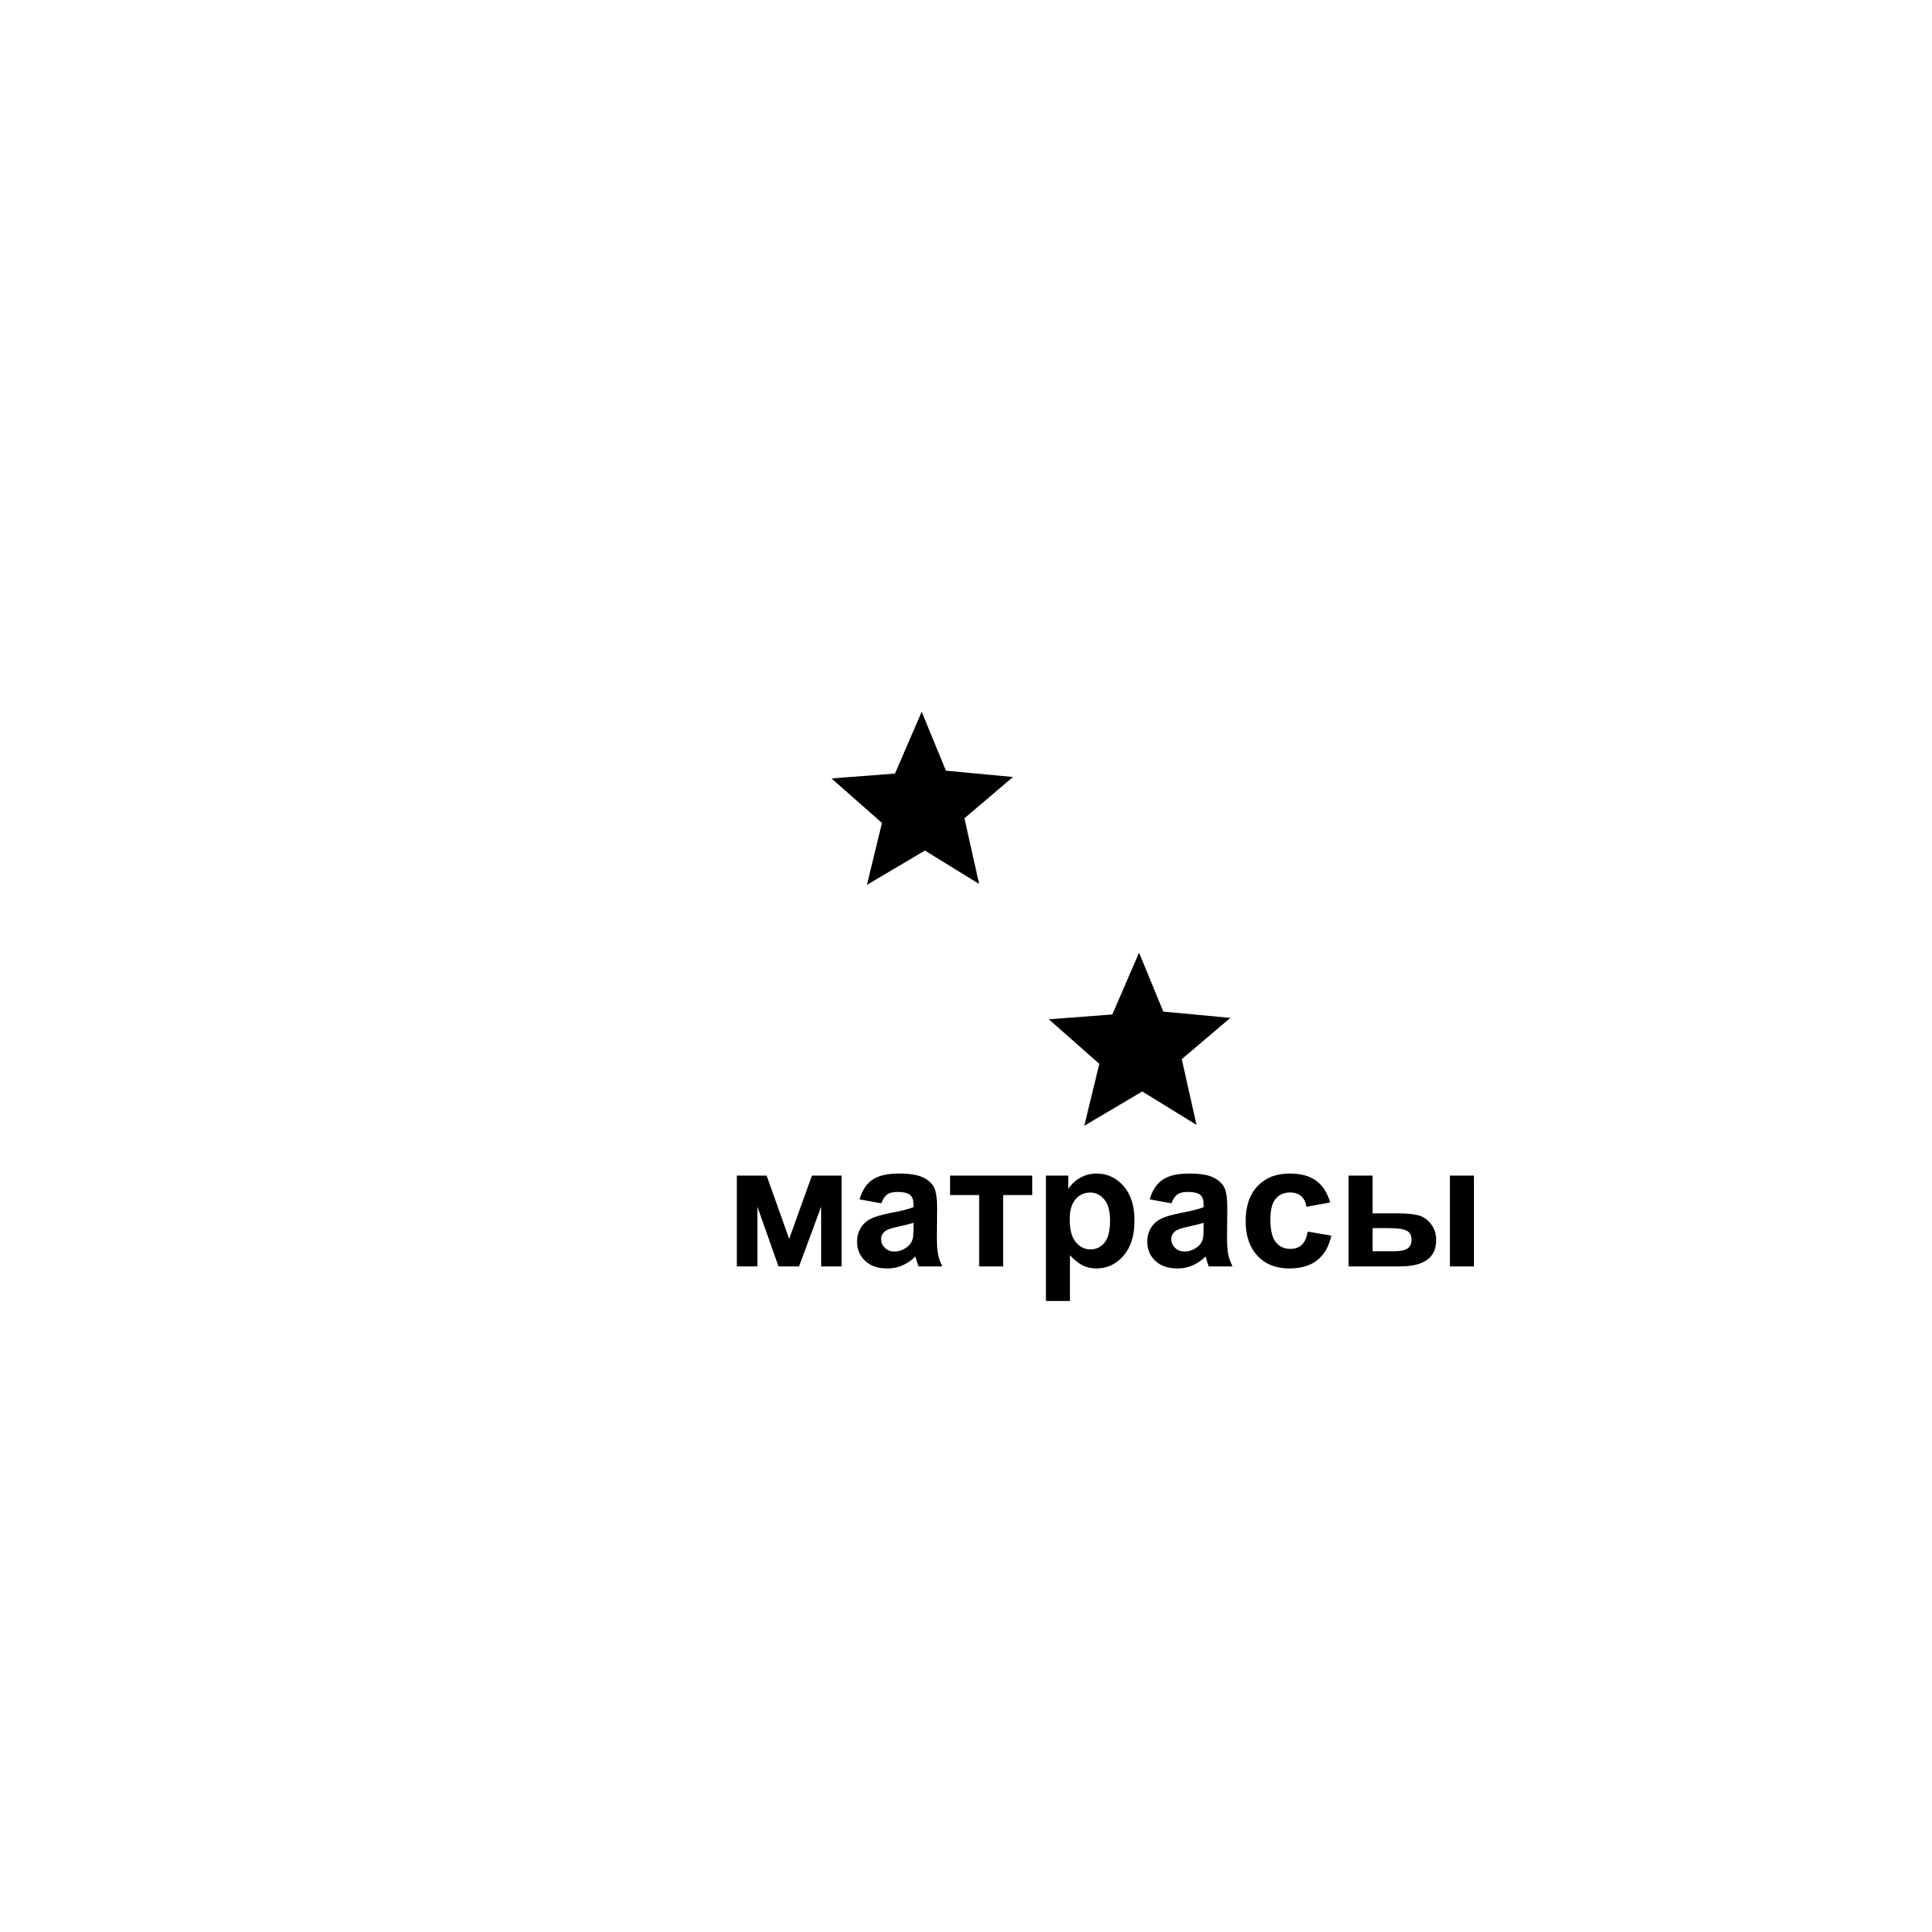 Cosul Logo - Consul Logo PNG Transparent & SVG Vector - Freebie Supply